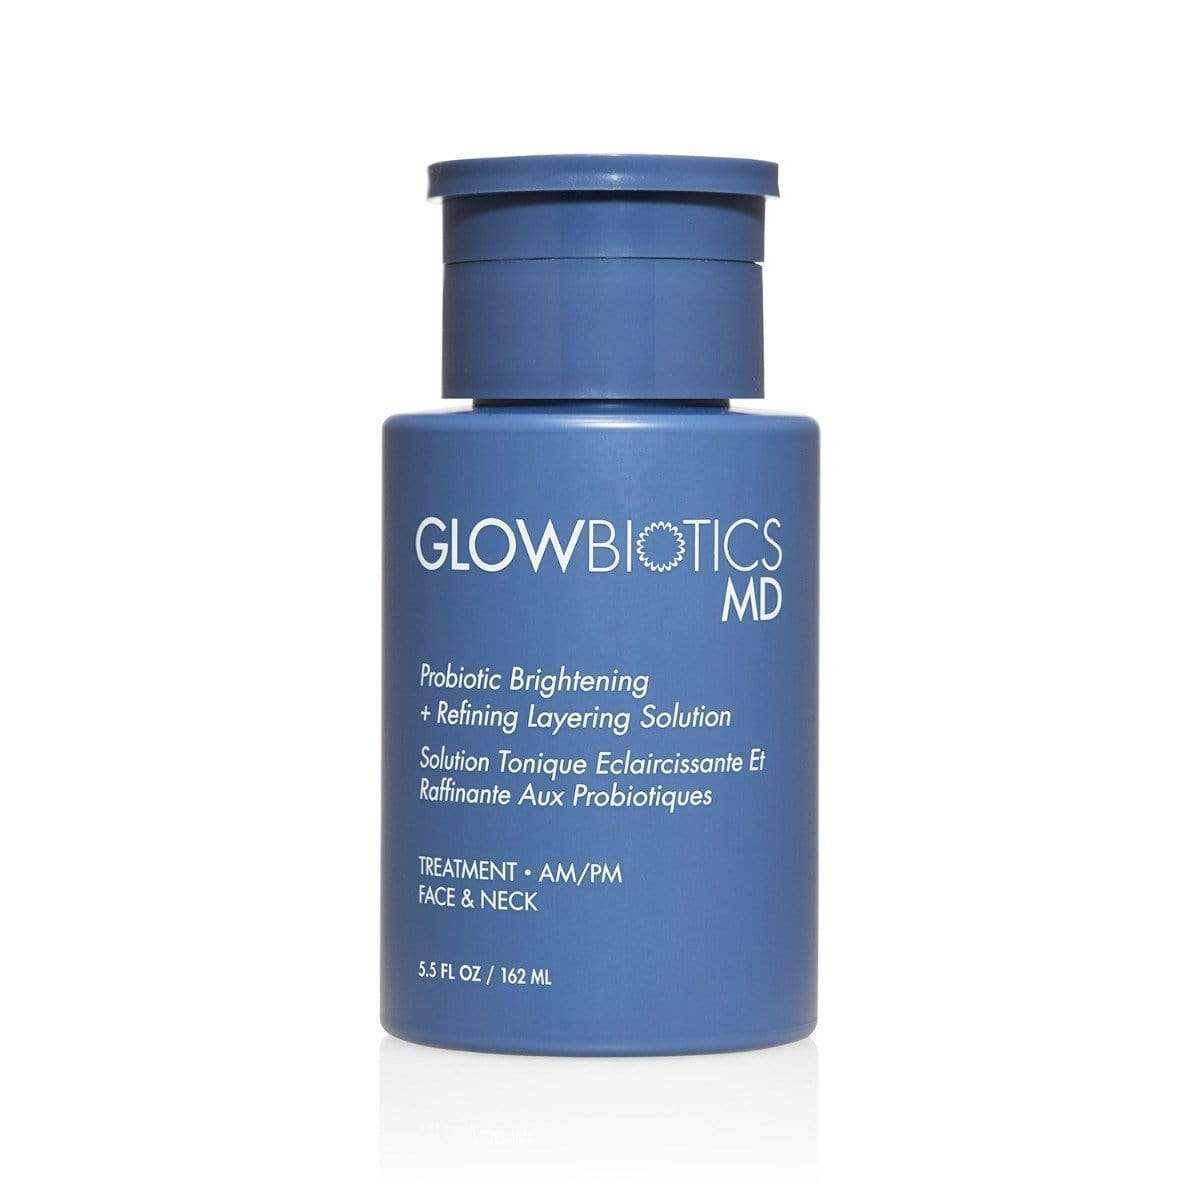 Glowbiotics MD Probiotic Brightening + Refining Layering Solution in a Blue Bottle 5.5 fl oz